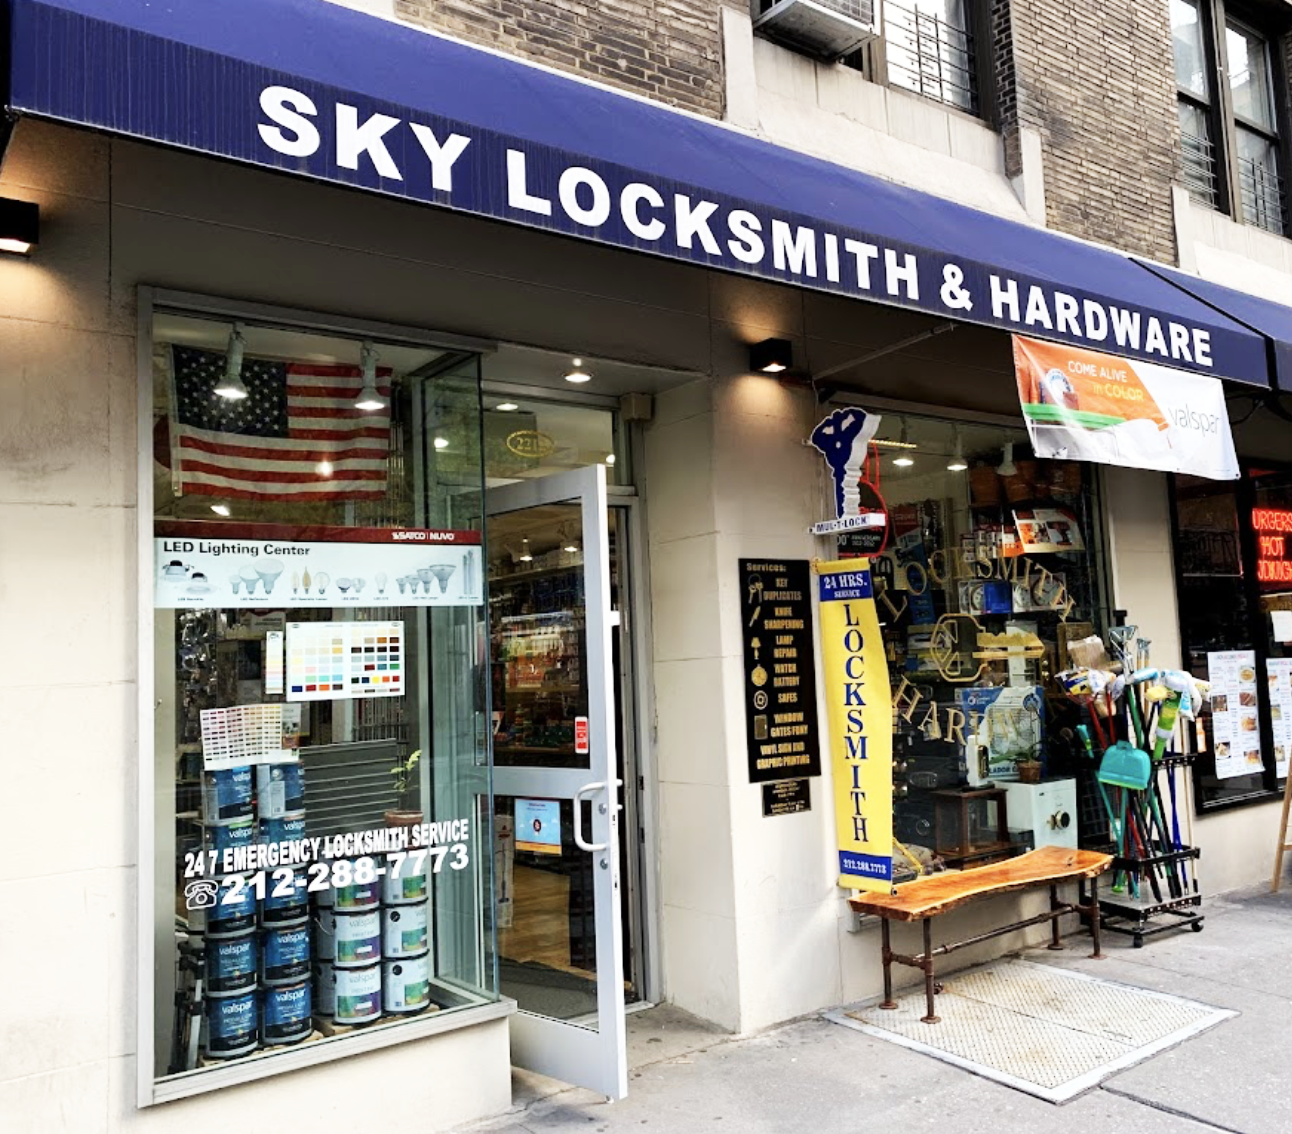 sky locksmith